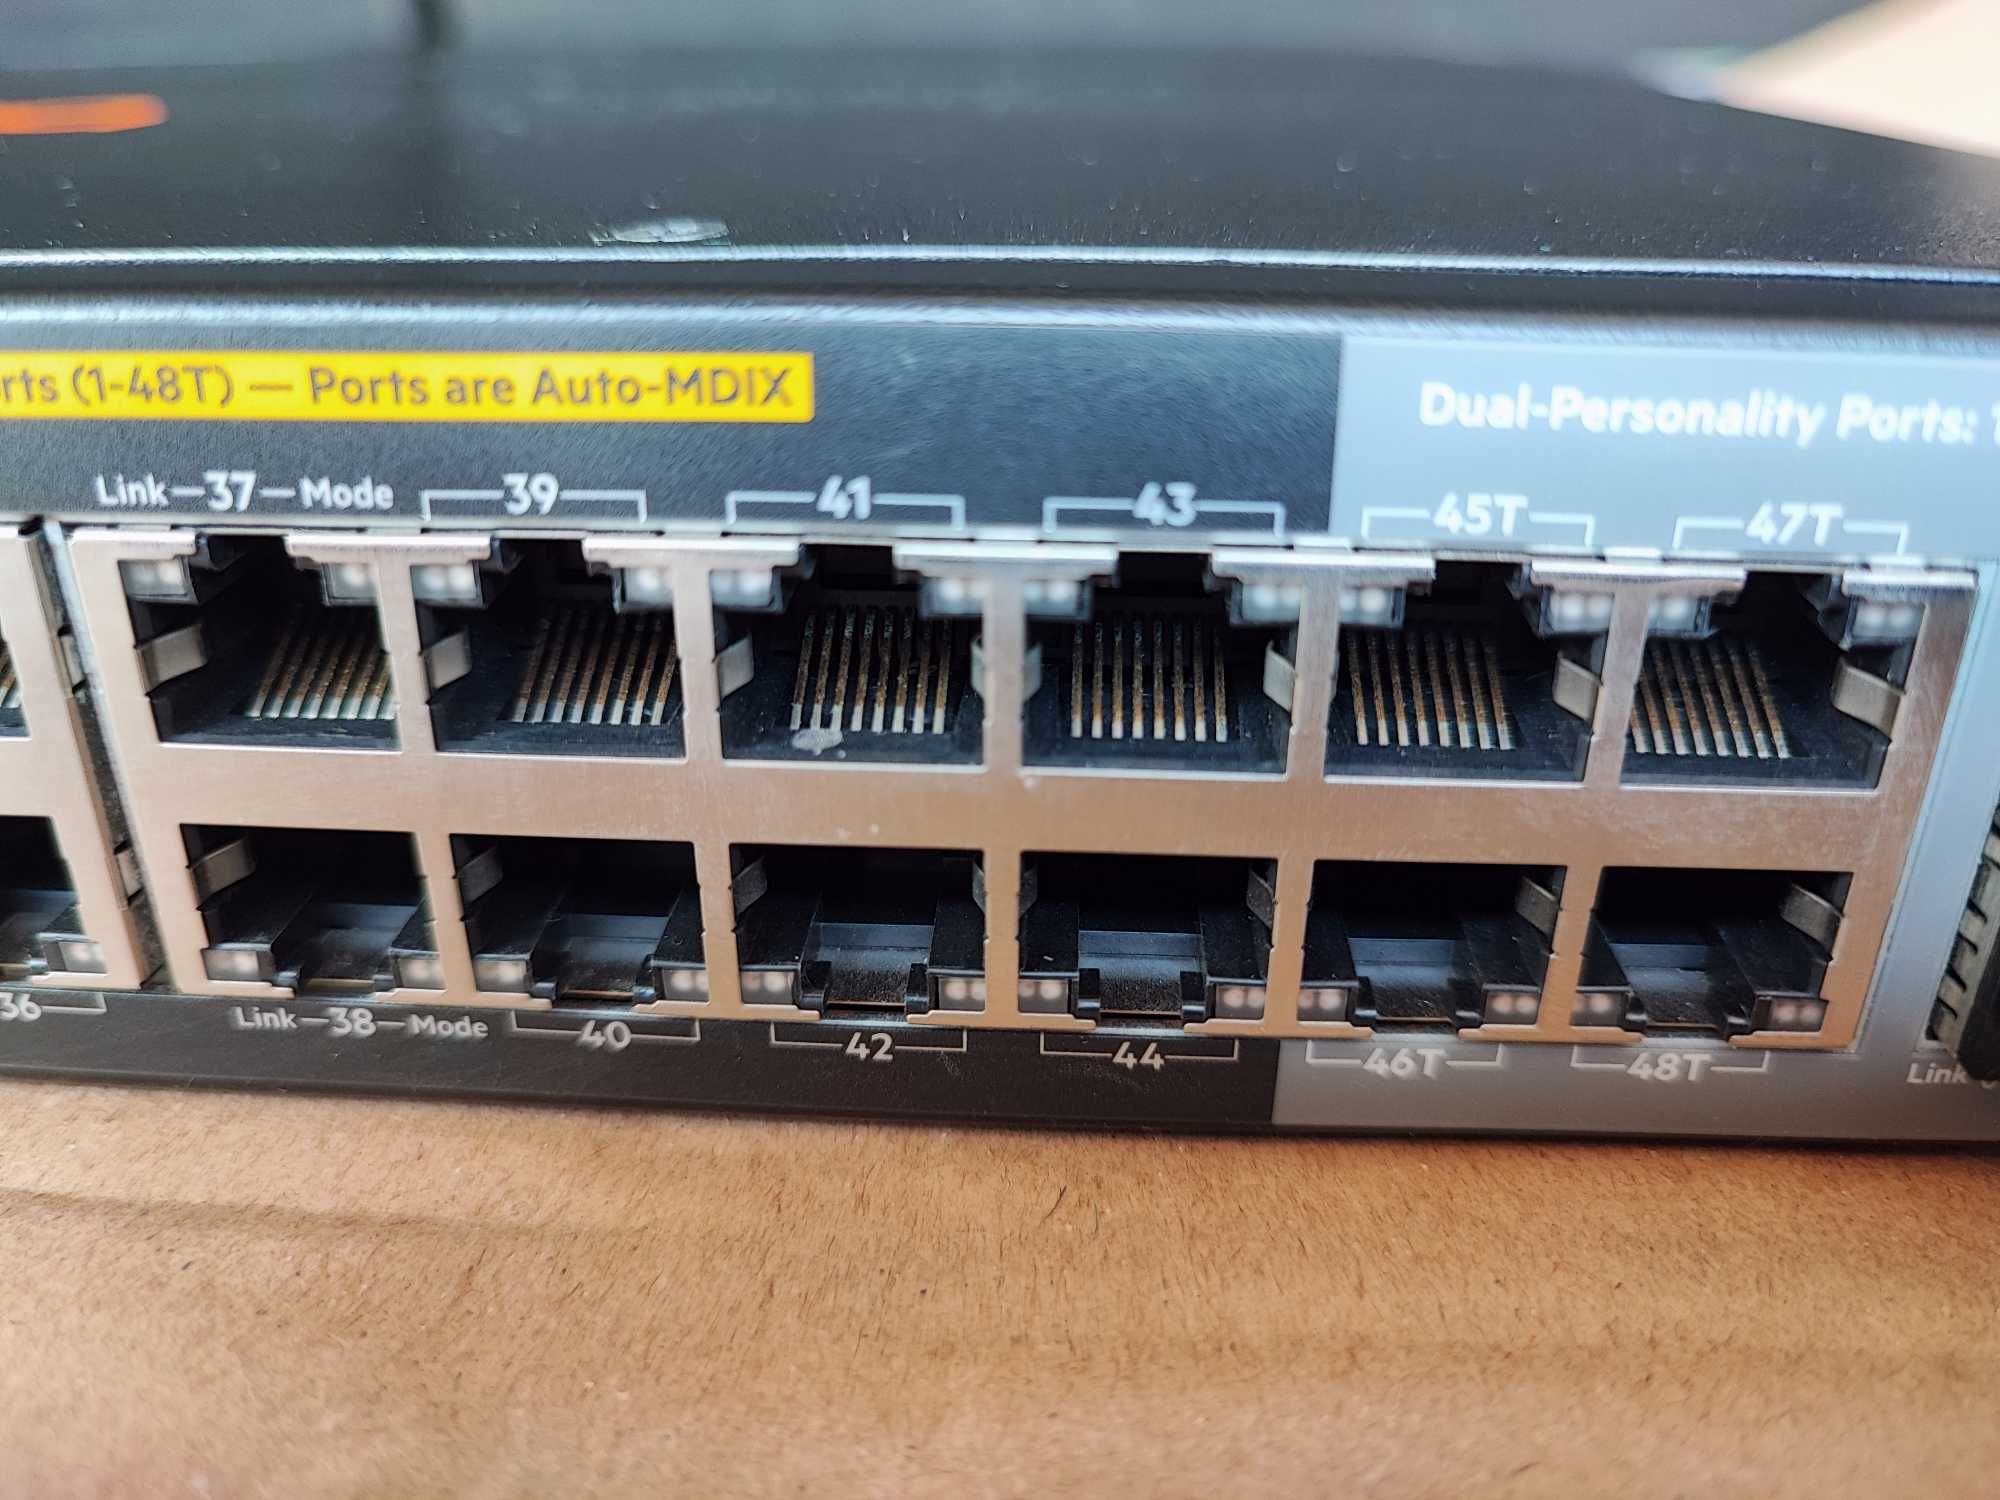 HP Aruba 2920-48G-POE+ Switch (J9729A)